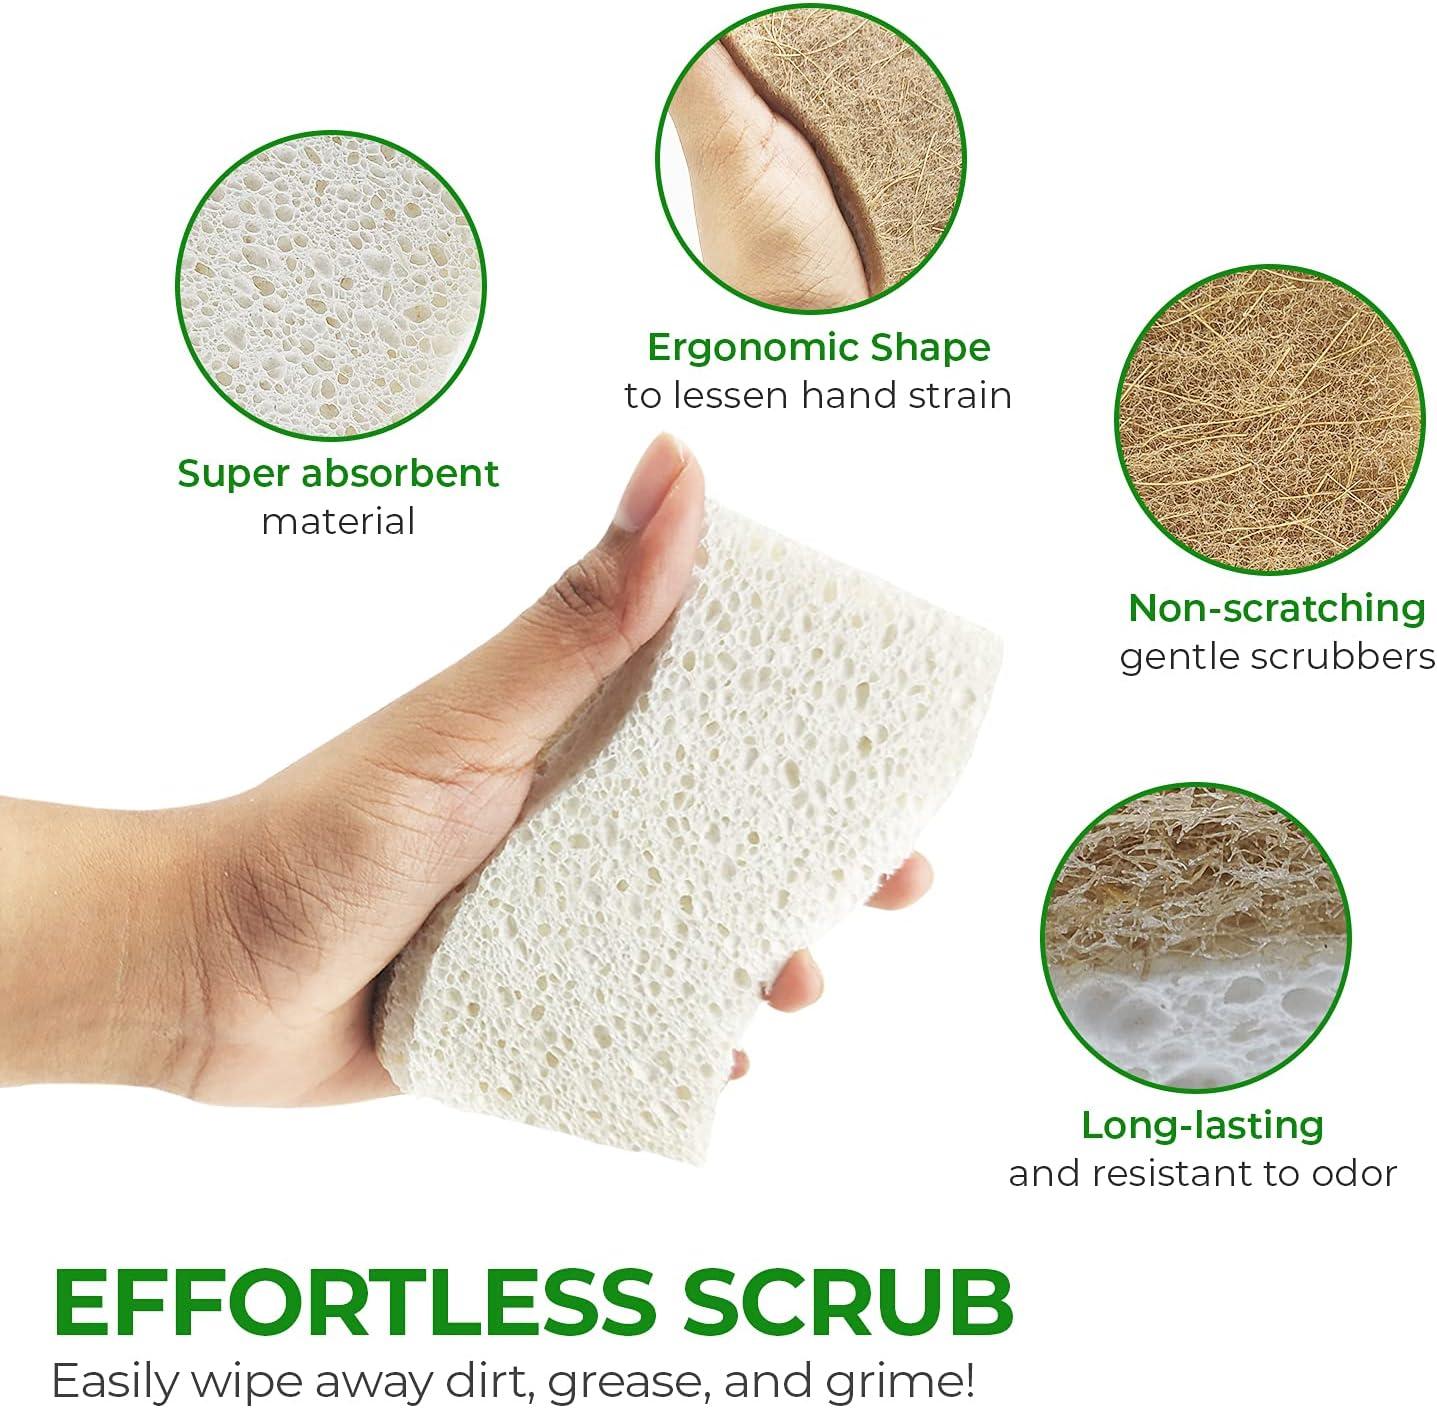 Biodegradable Coconut Kitchen Scourers- 5 Pack, Zero Waste Dish Scrubber